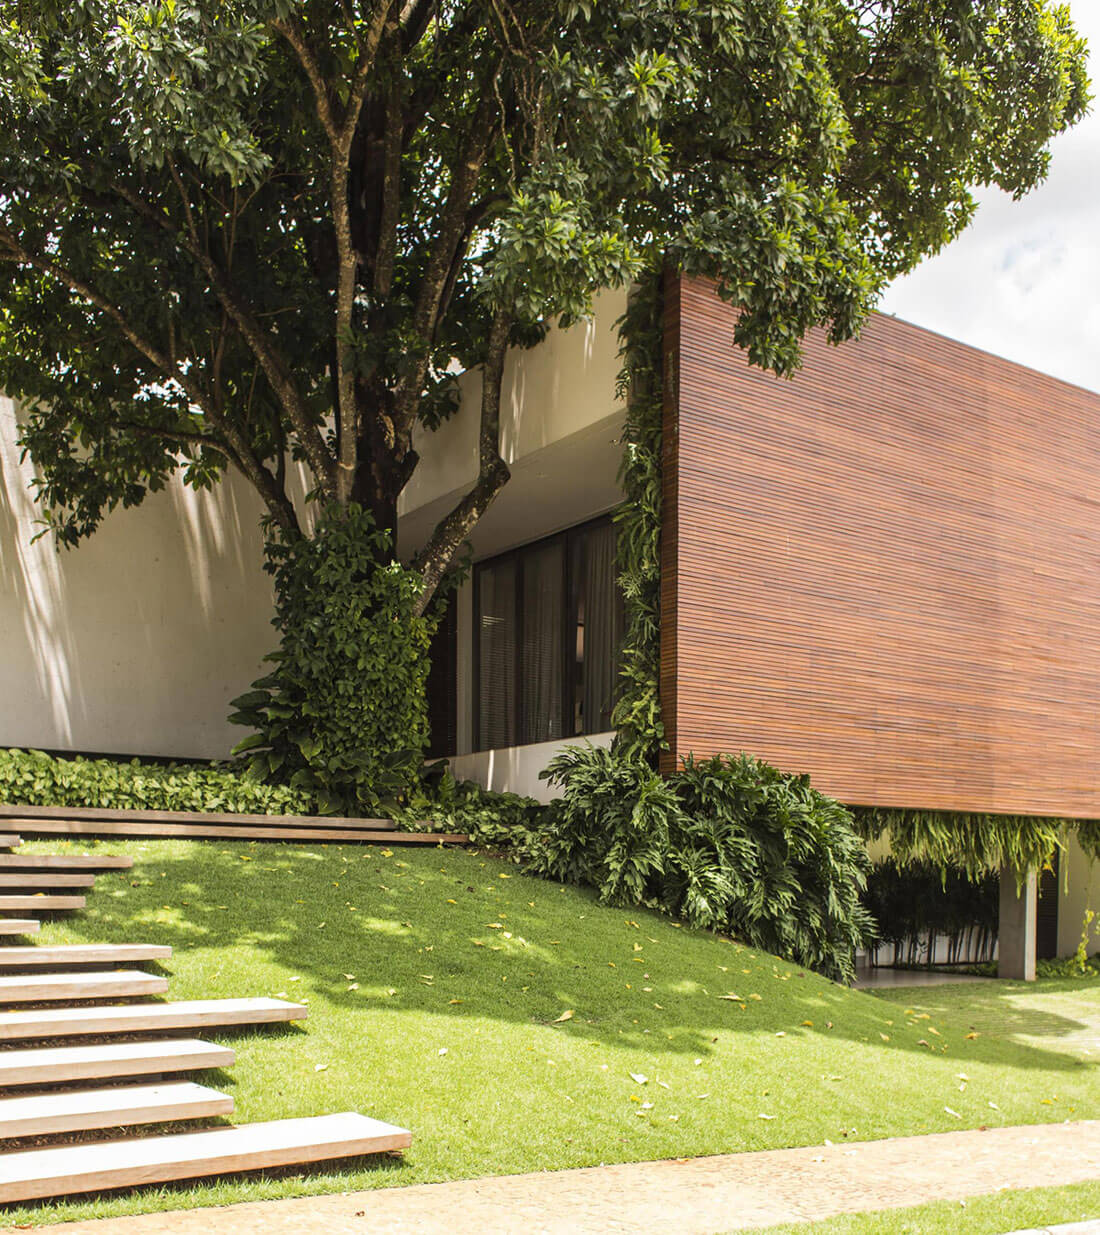 RMJ Residence by Felipe Bueno and Alexandre Bueno